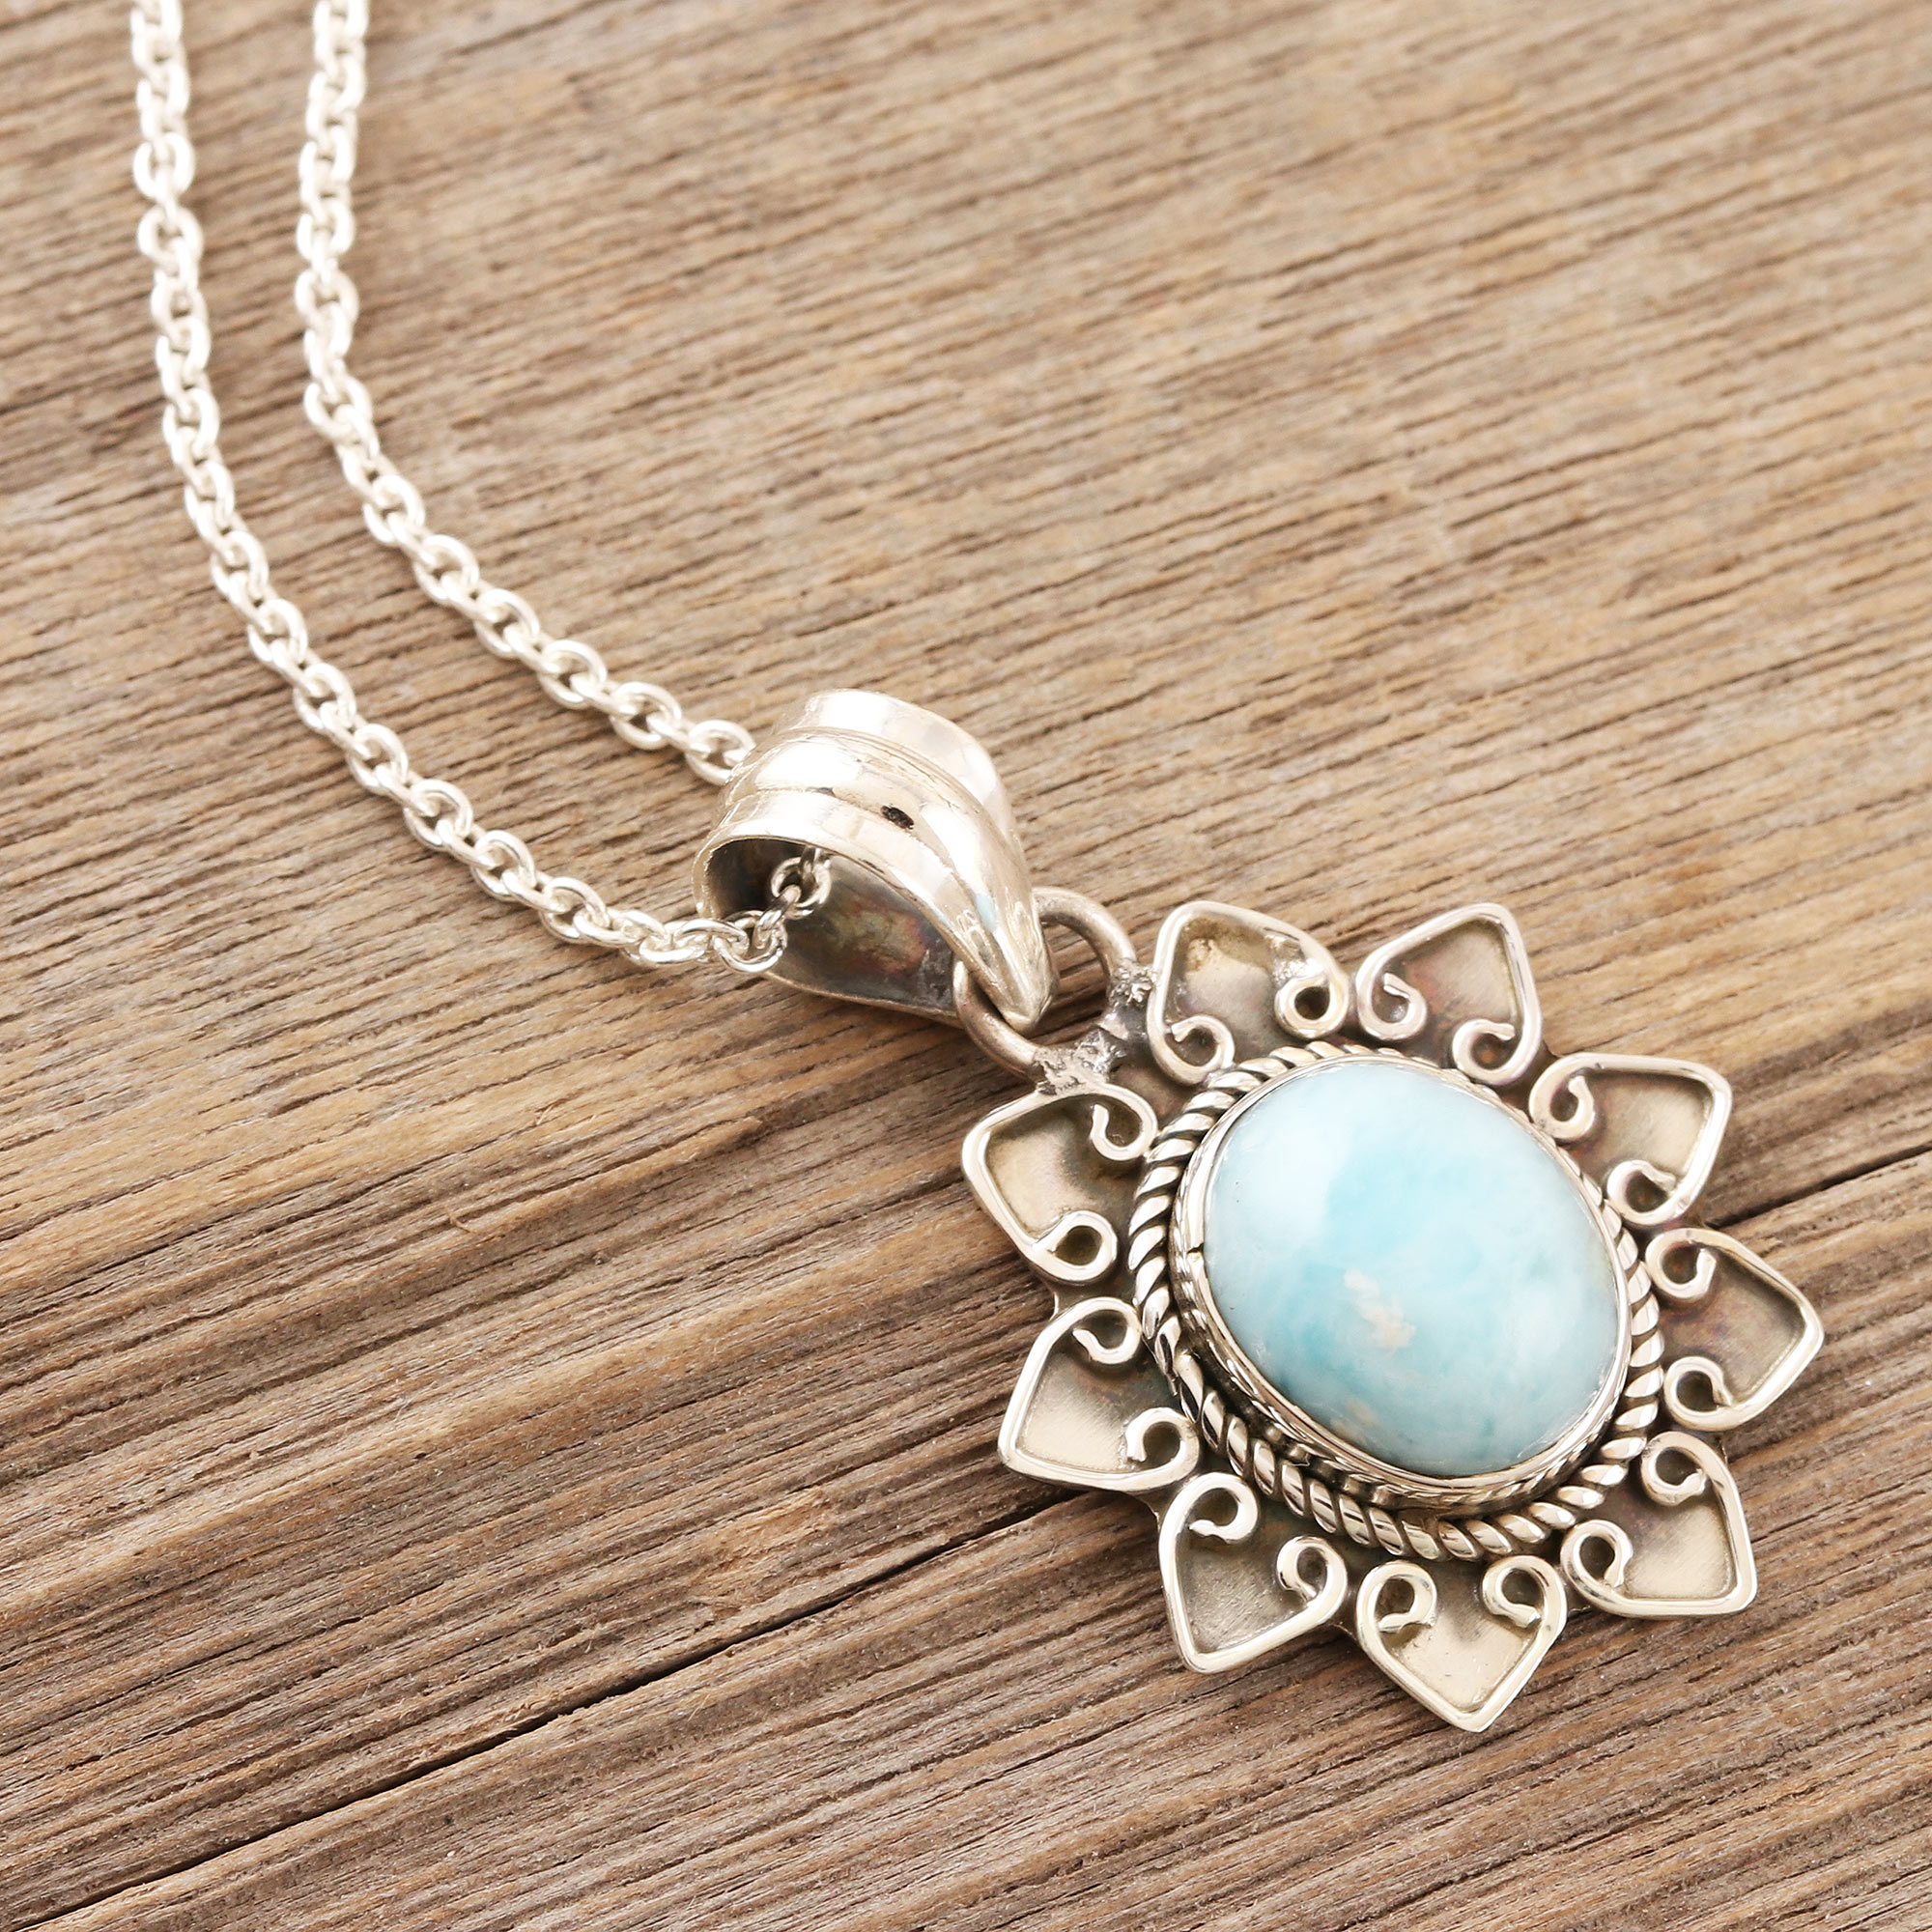 Larimar Top Quality Pendant Larimar Silver Pendant,Larimar Gemstone Jewelry Gift For Her Larimar Handmade Pendant Gift For Mother